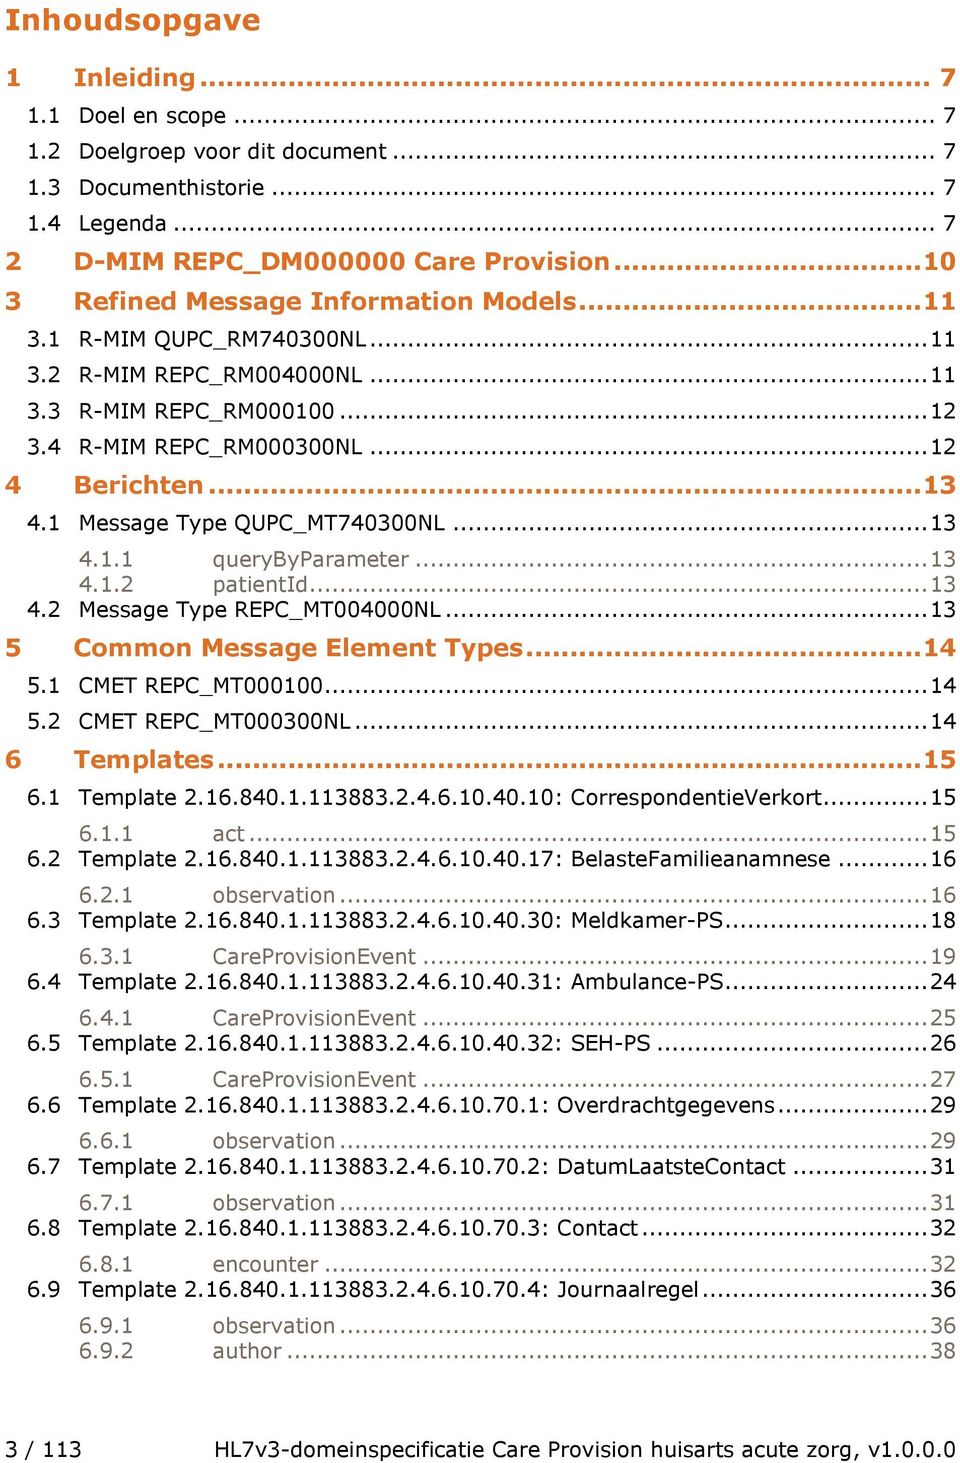 1 Message Type QUPC_MT740300NL... 13 4.1.1 querybyparameter... 13 4.1.2 patientid... 13 4.2 Message Type REPC_MT004000NL... 13 5 Common Message Element Types...14 5.1 CMET REPC_MT000100... 14 5.